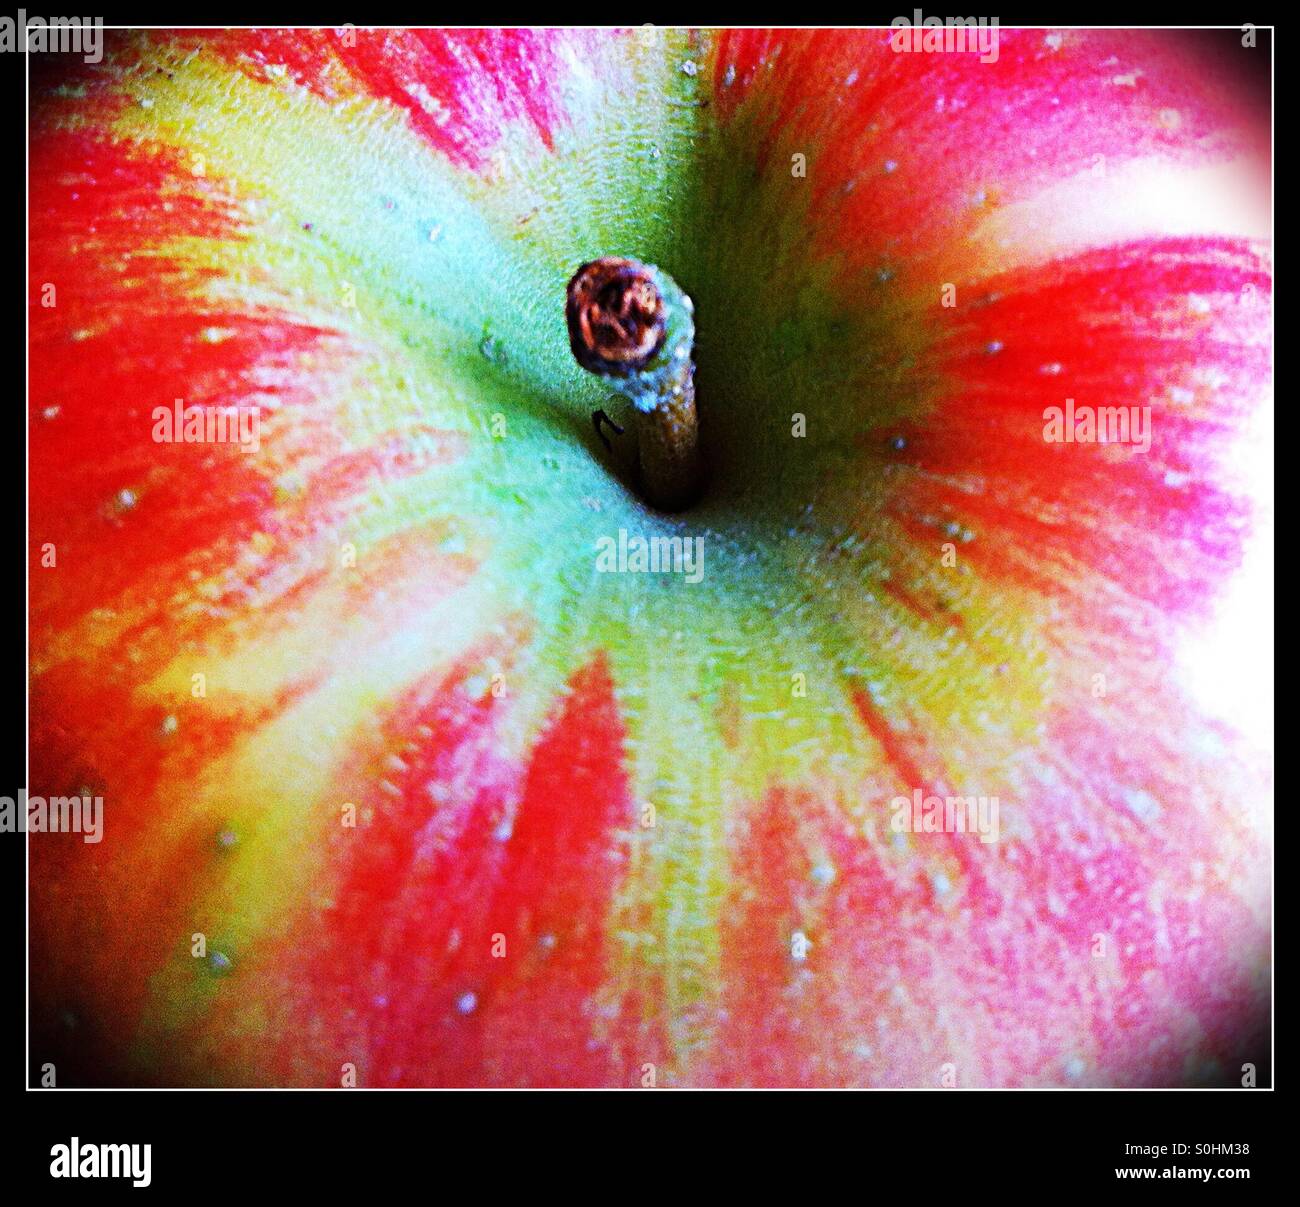 Raw Organic Honeycrisp Apples Stock Photo - Download Image Now